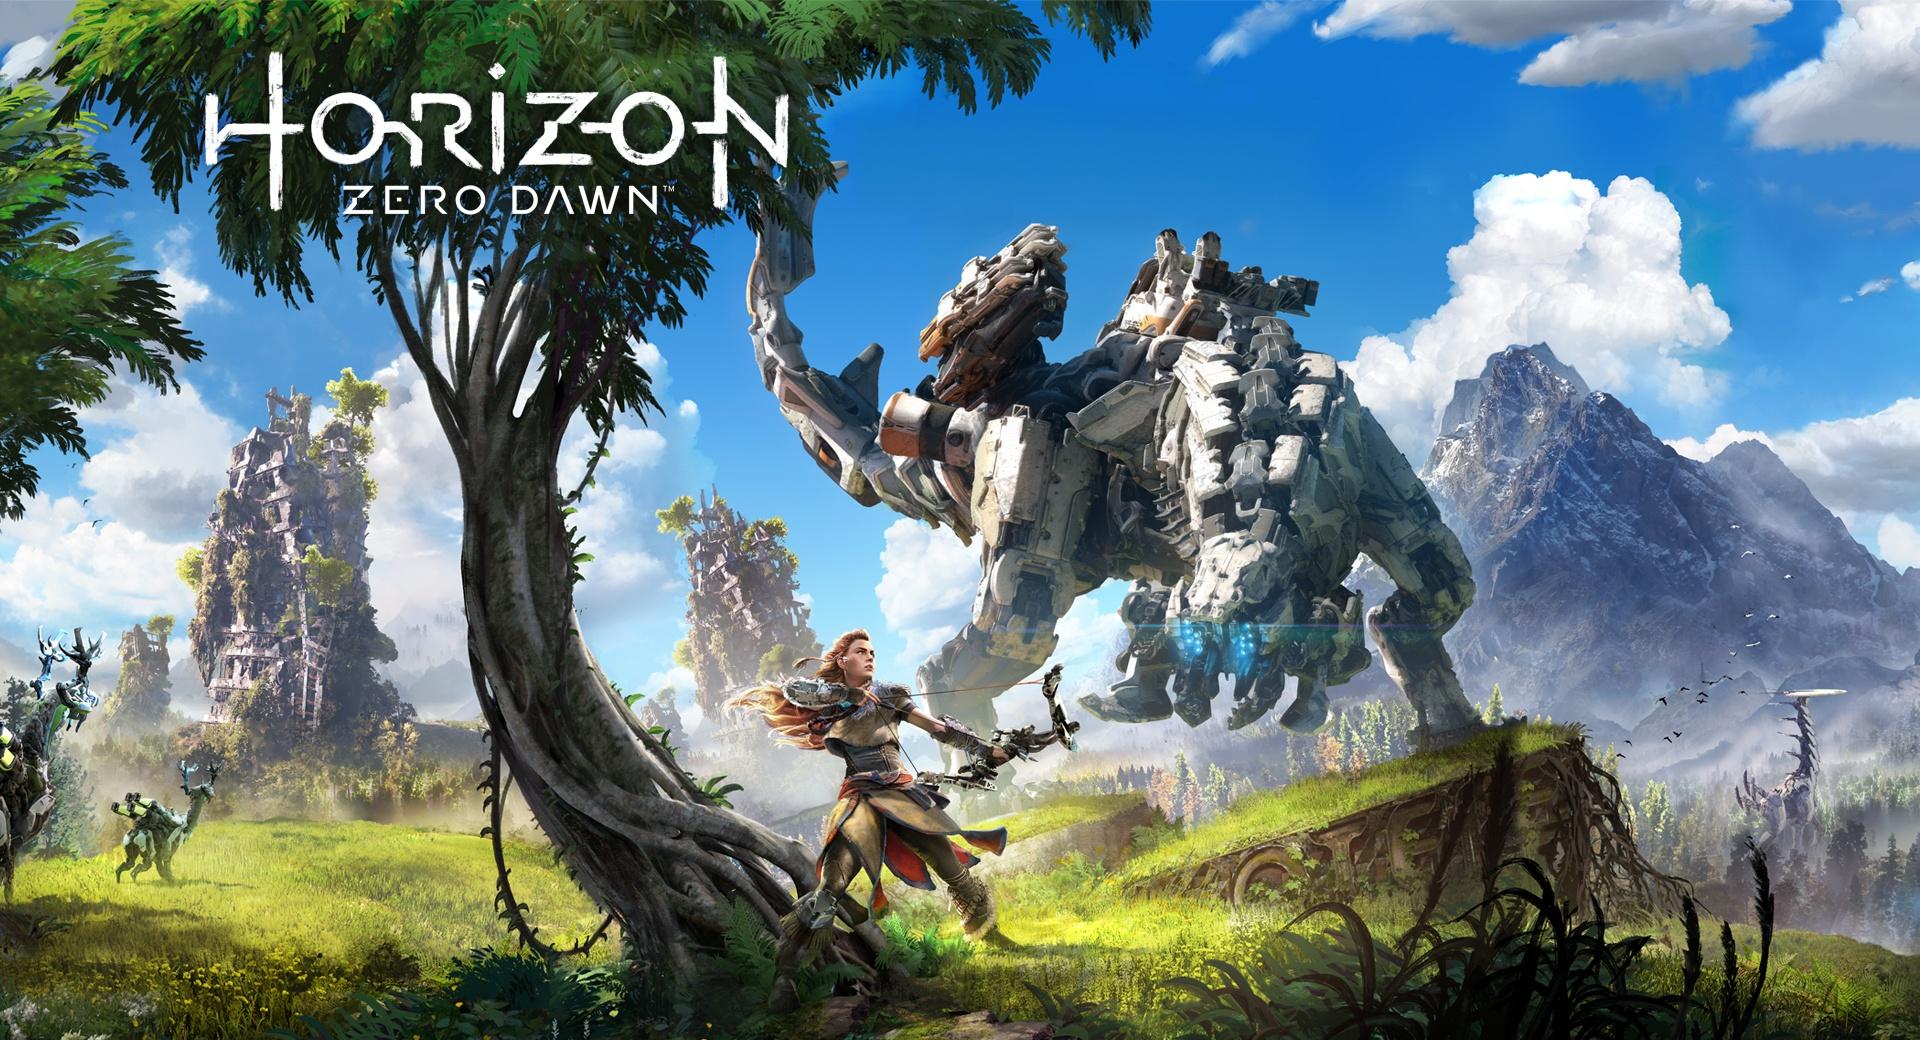 Horizon Zero Dawn 2017 Video Game at 1600 x 1200 size wallpapers HD quality